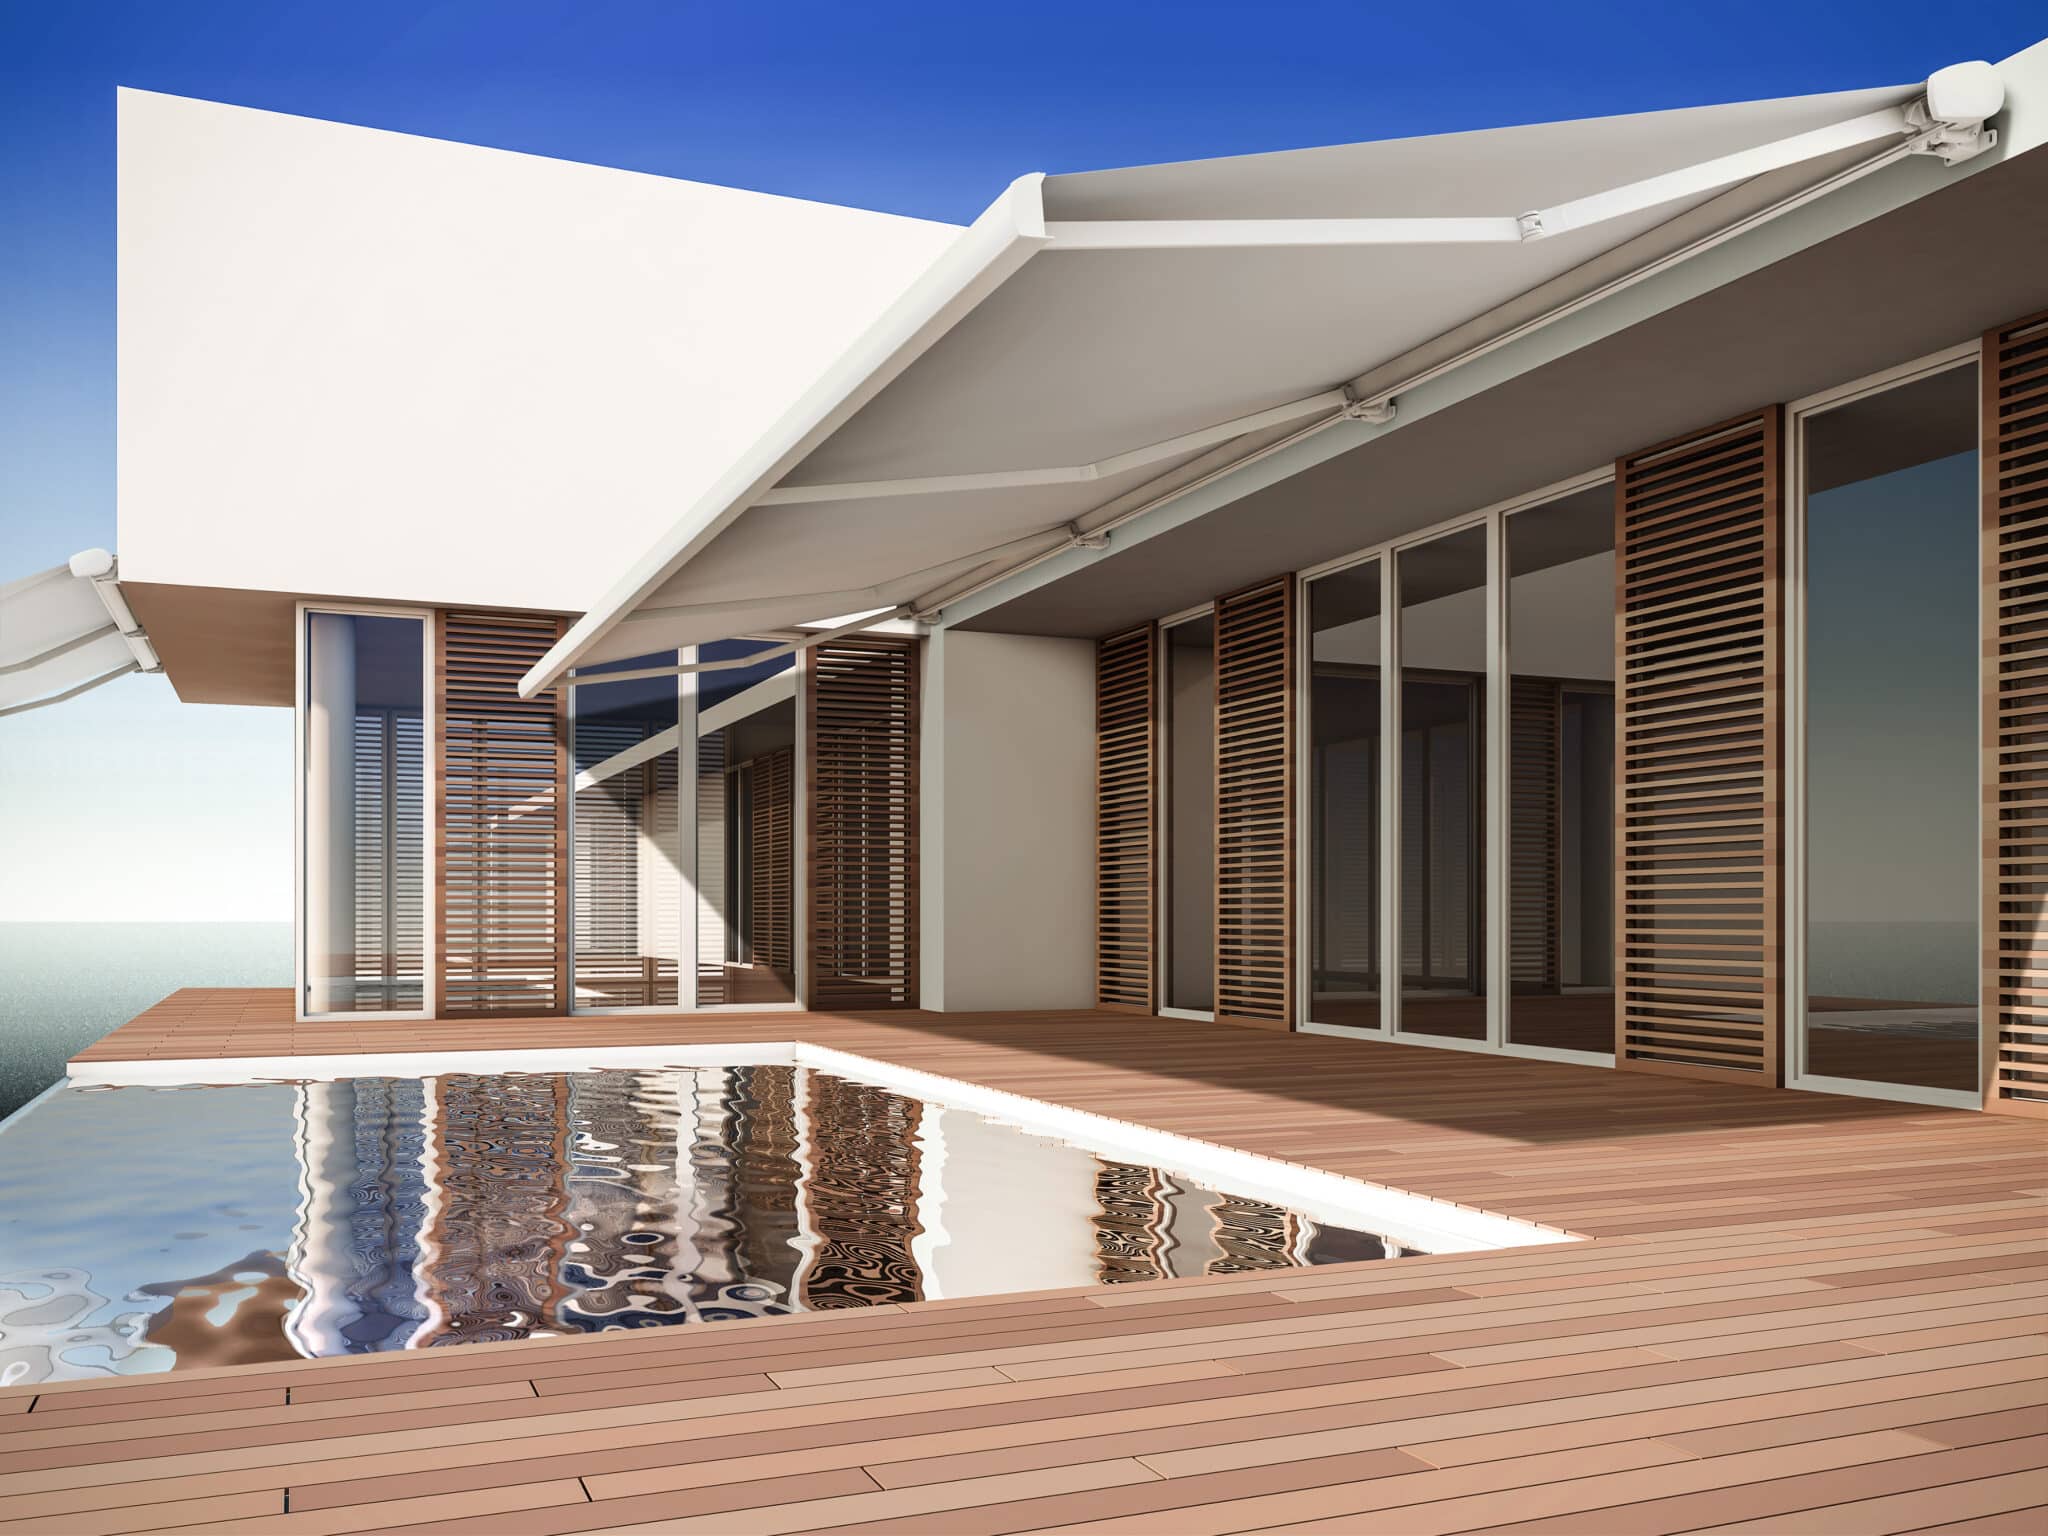 A 3D illustration of modern house in minimalist style.; Shutterstock ID 72207187; PO: 0000